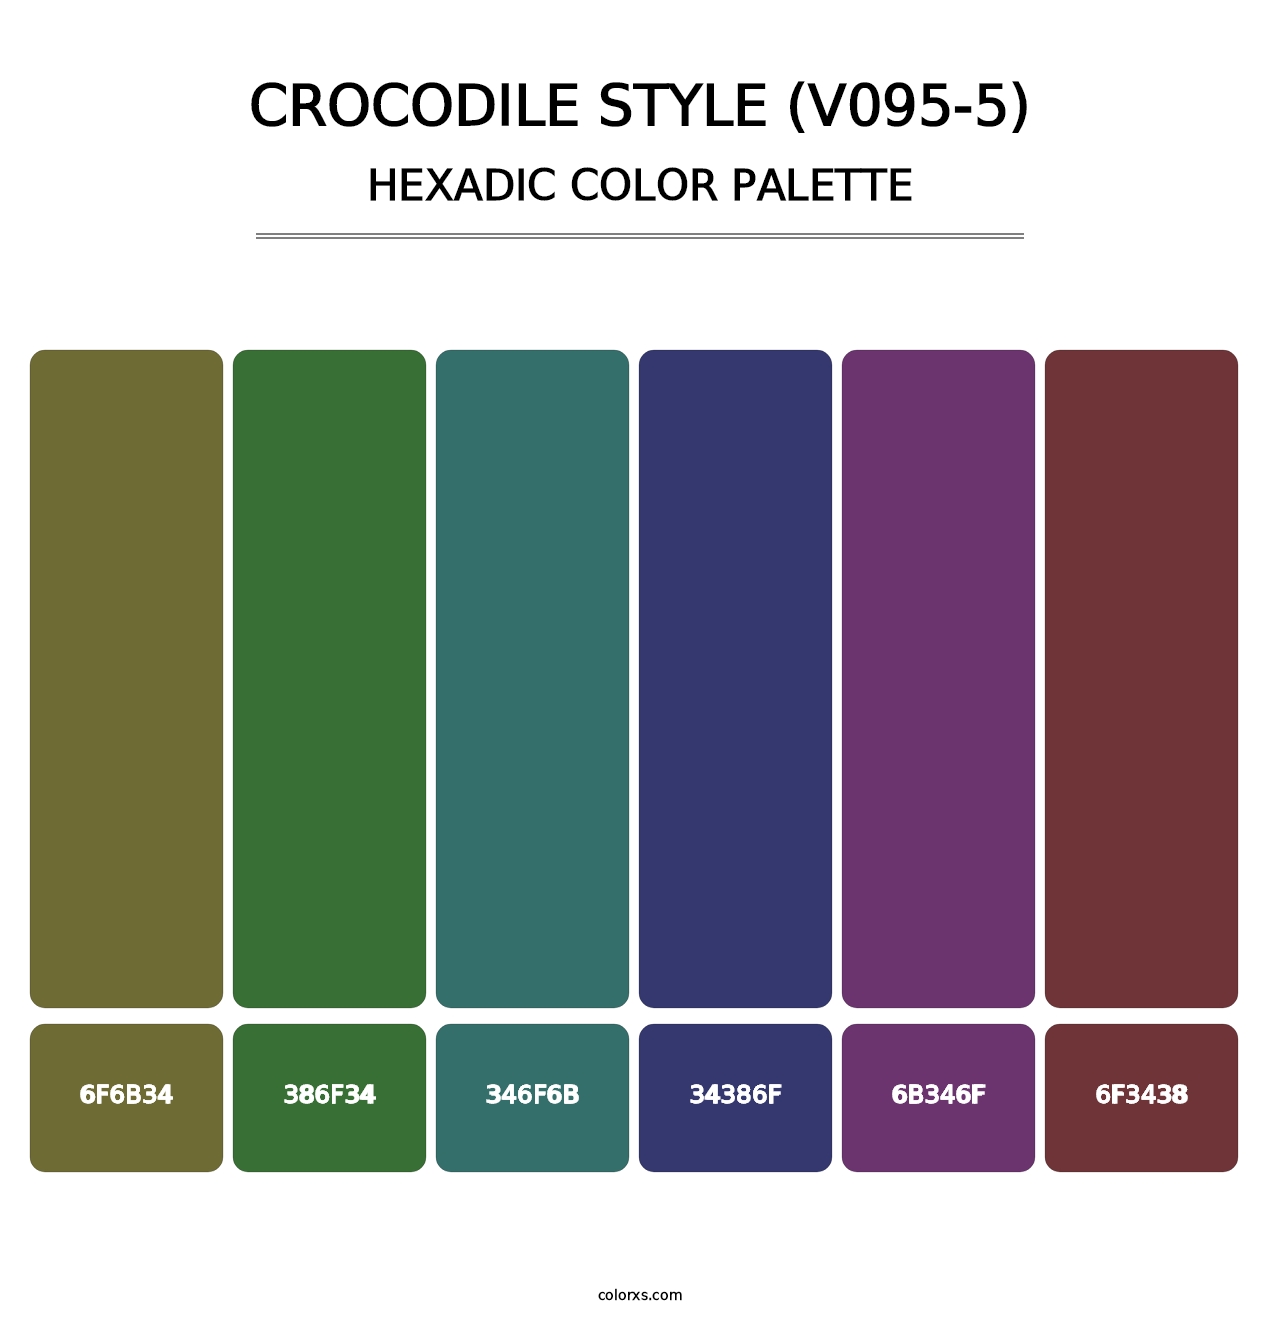 Crocodile Style (V095-5) - Hexadic Color Palette